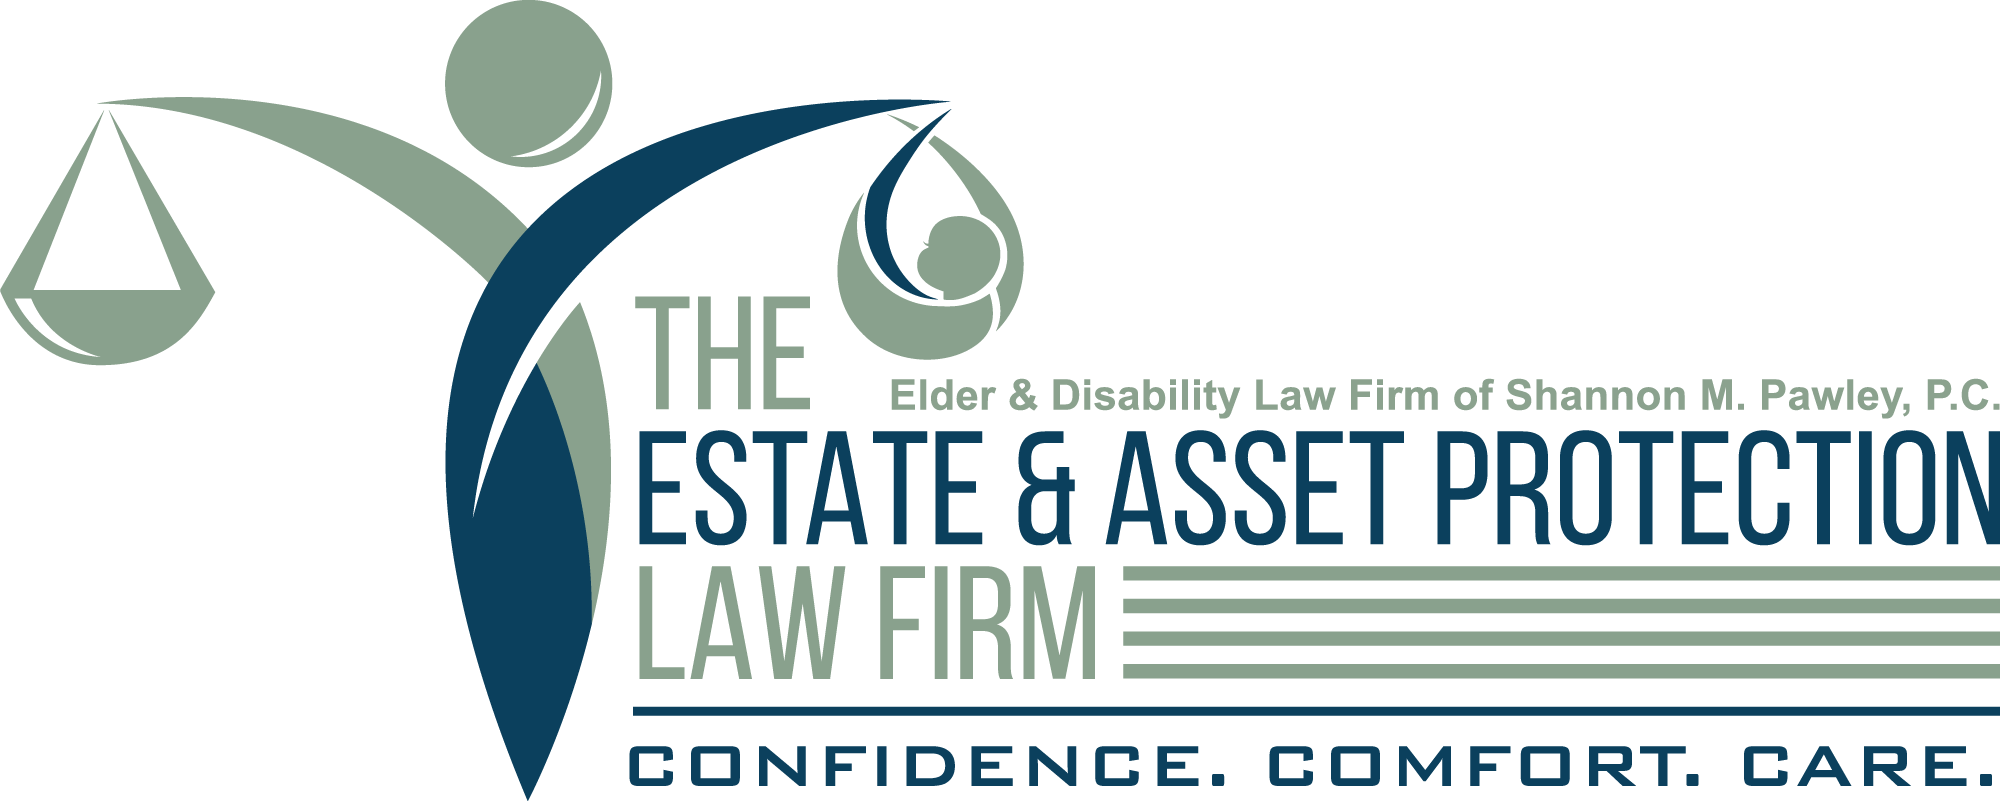 Image of elder care tips elder care advice Alzheimers awareness Alzheimers  on estate management asset protection law site